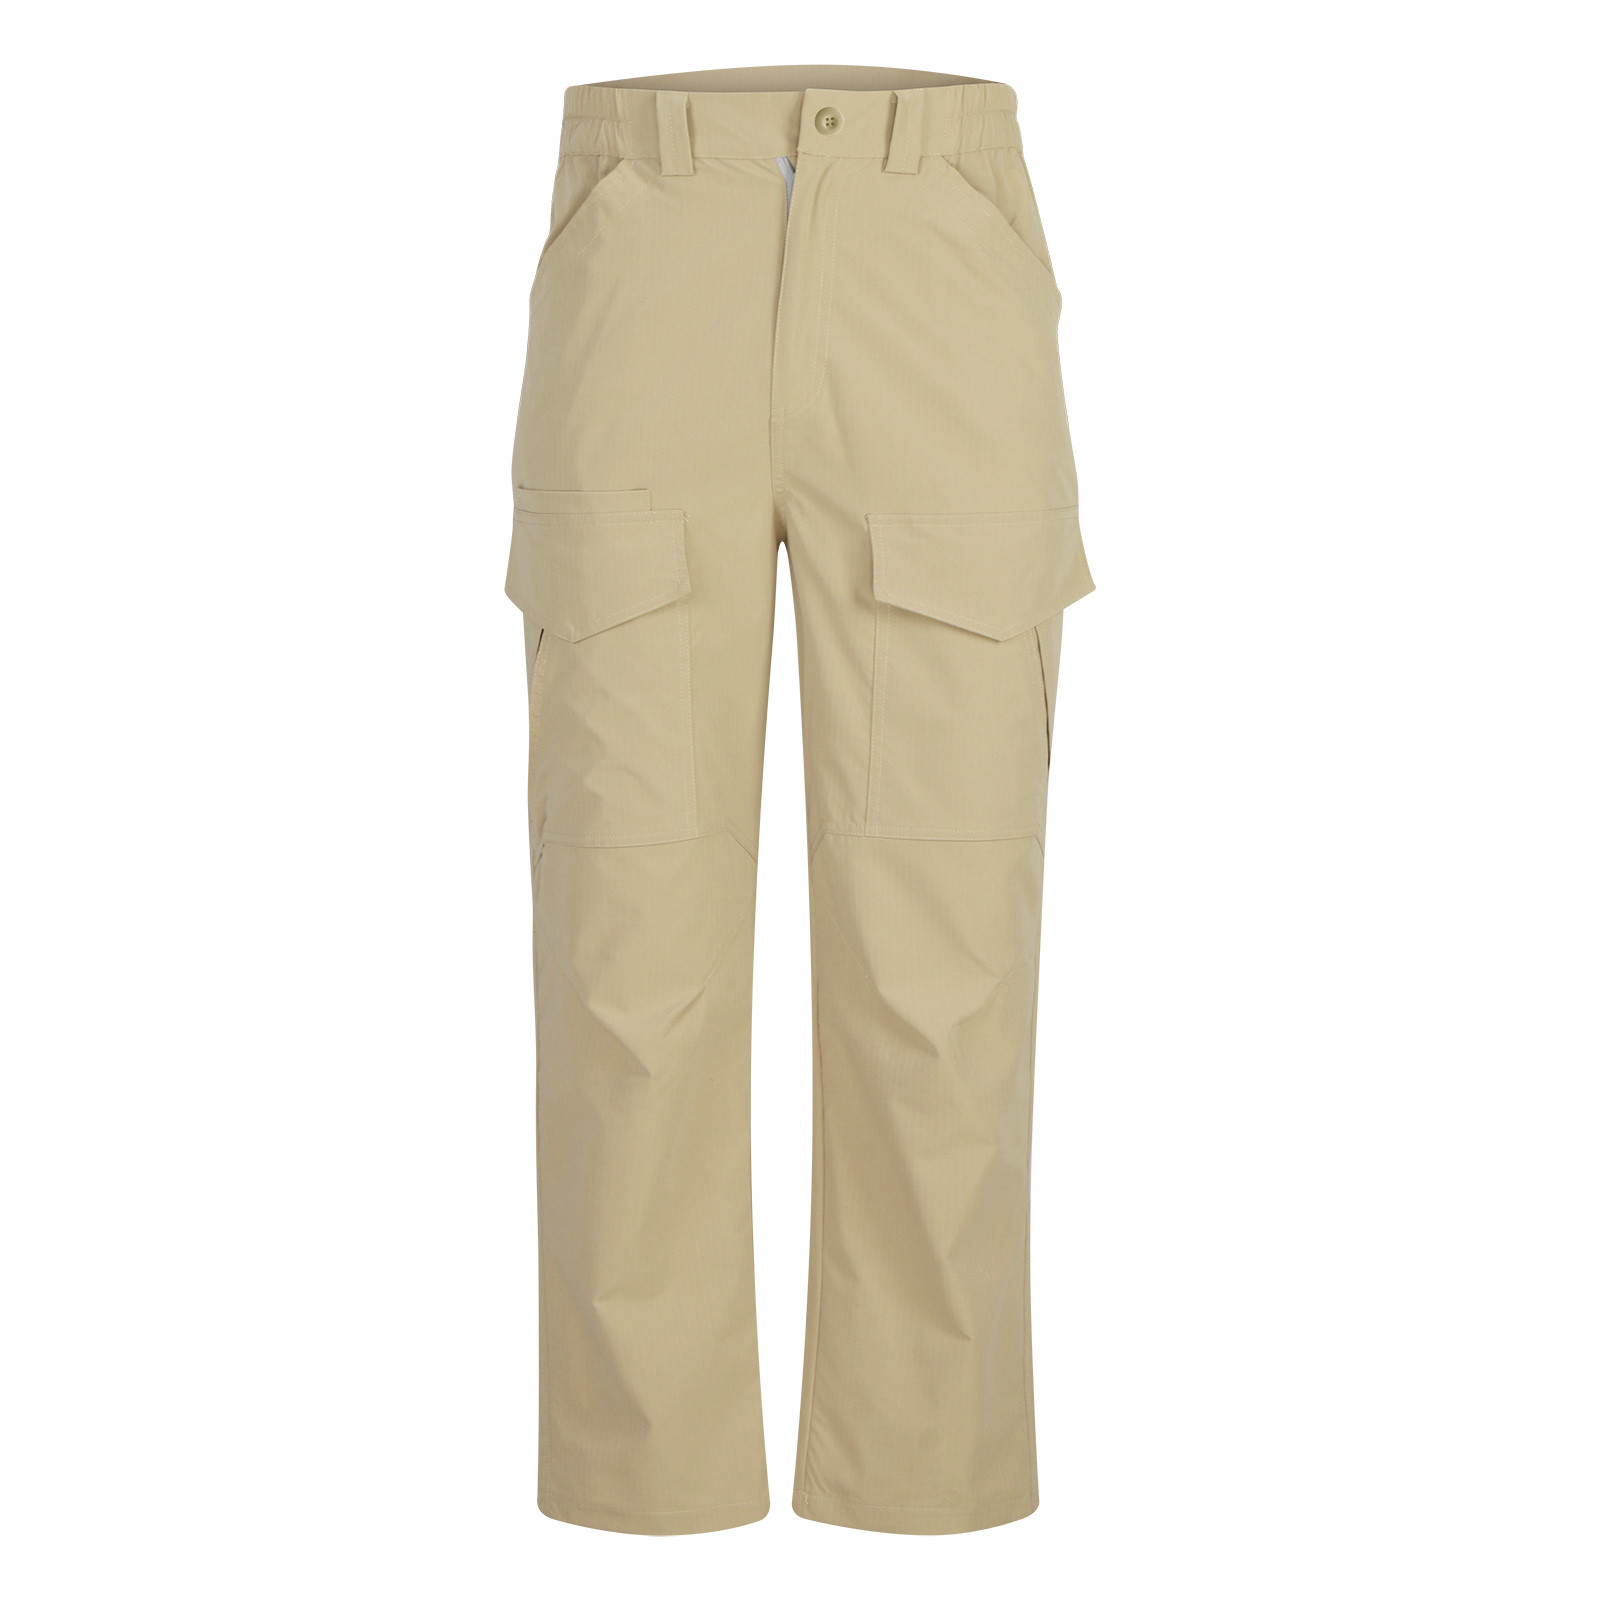 DDAPJ pyju Men's Hiking Cargo Pants Quick-Dry Lightweight Waterproof ...